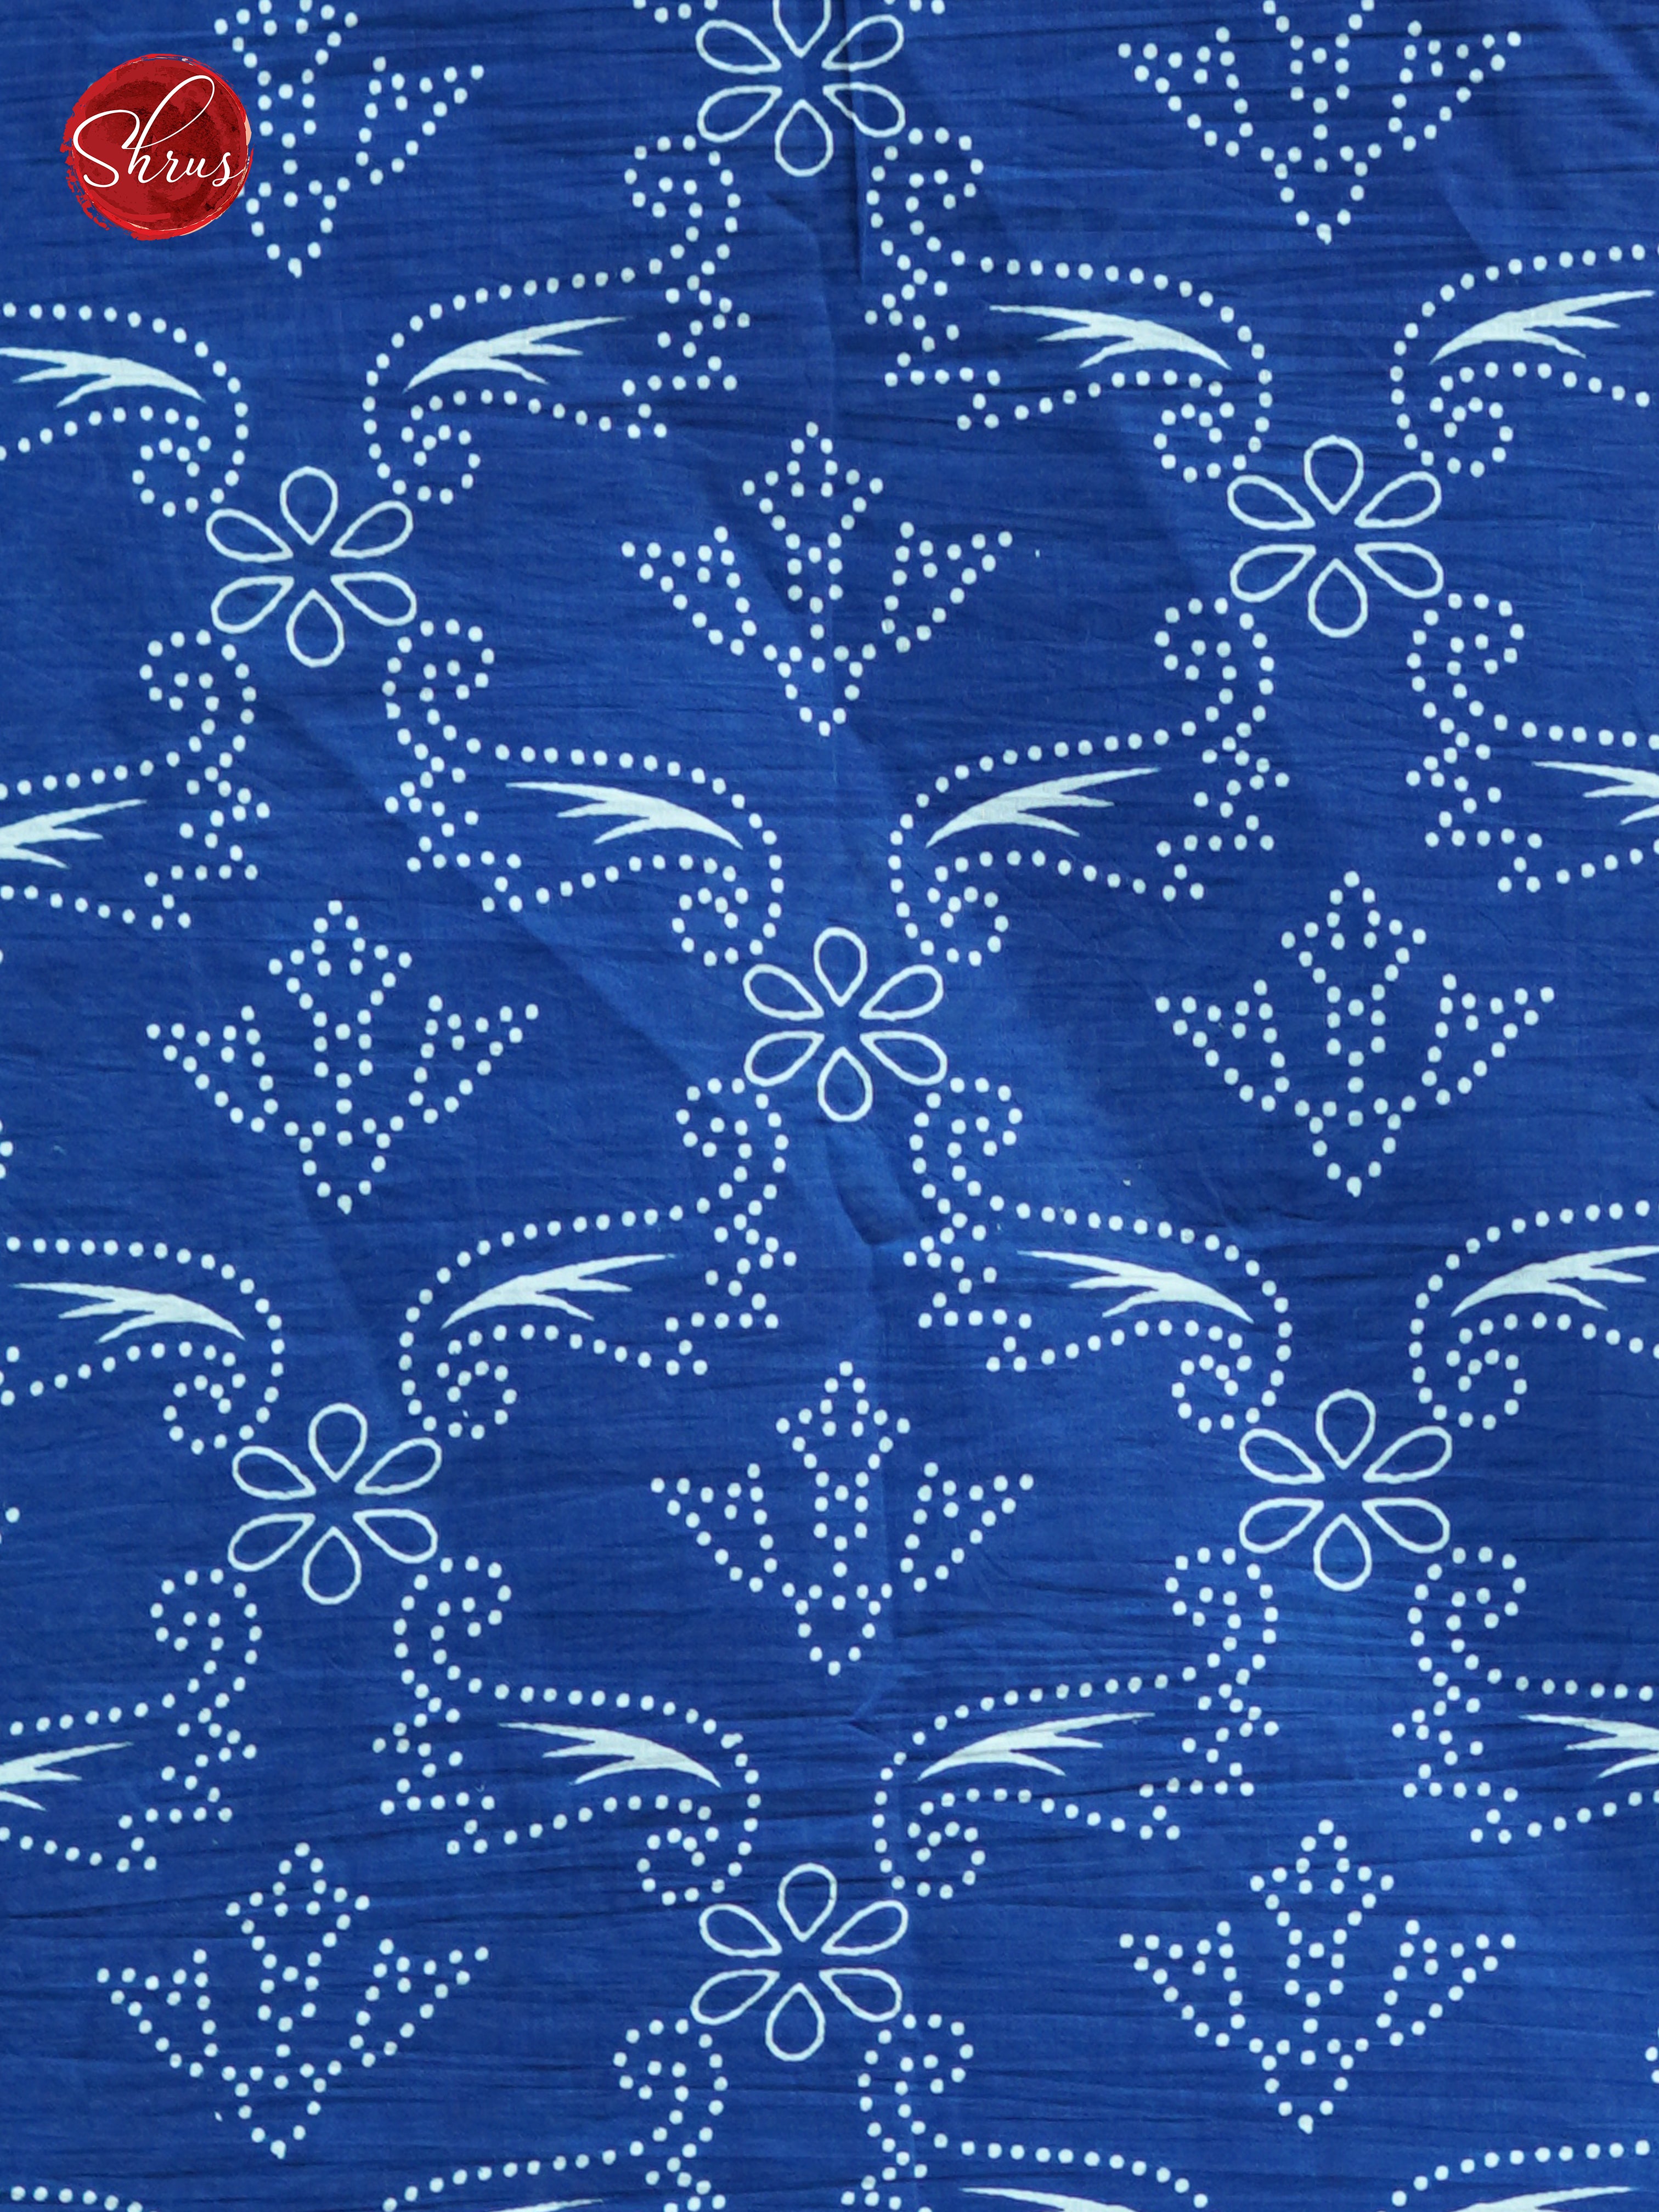 Blue(Single Tone) - Jaipur cotton